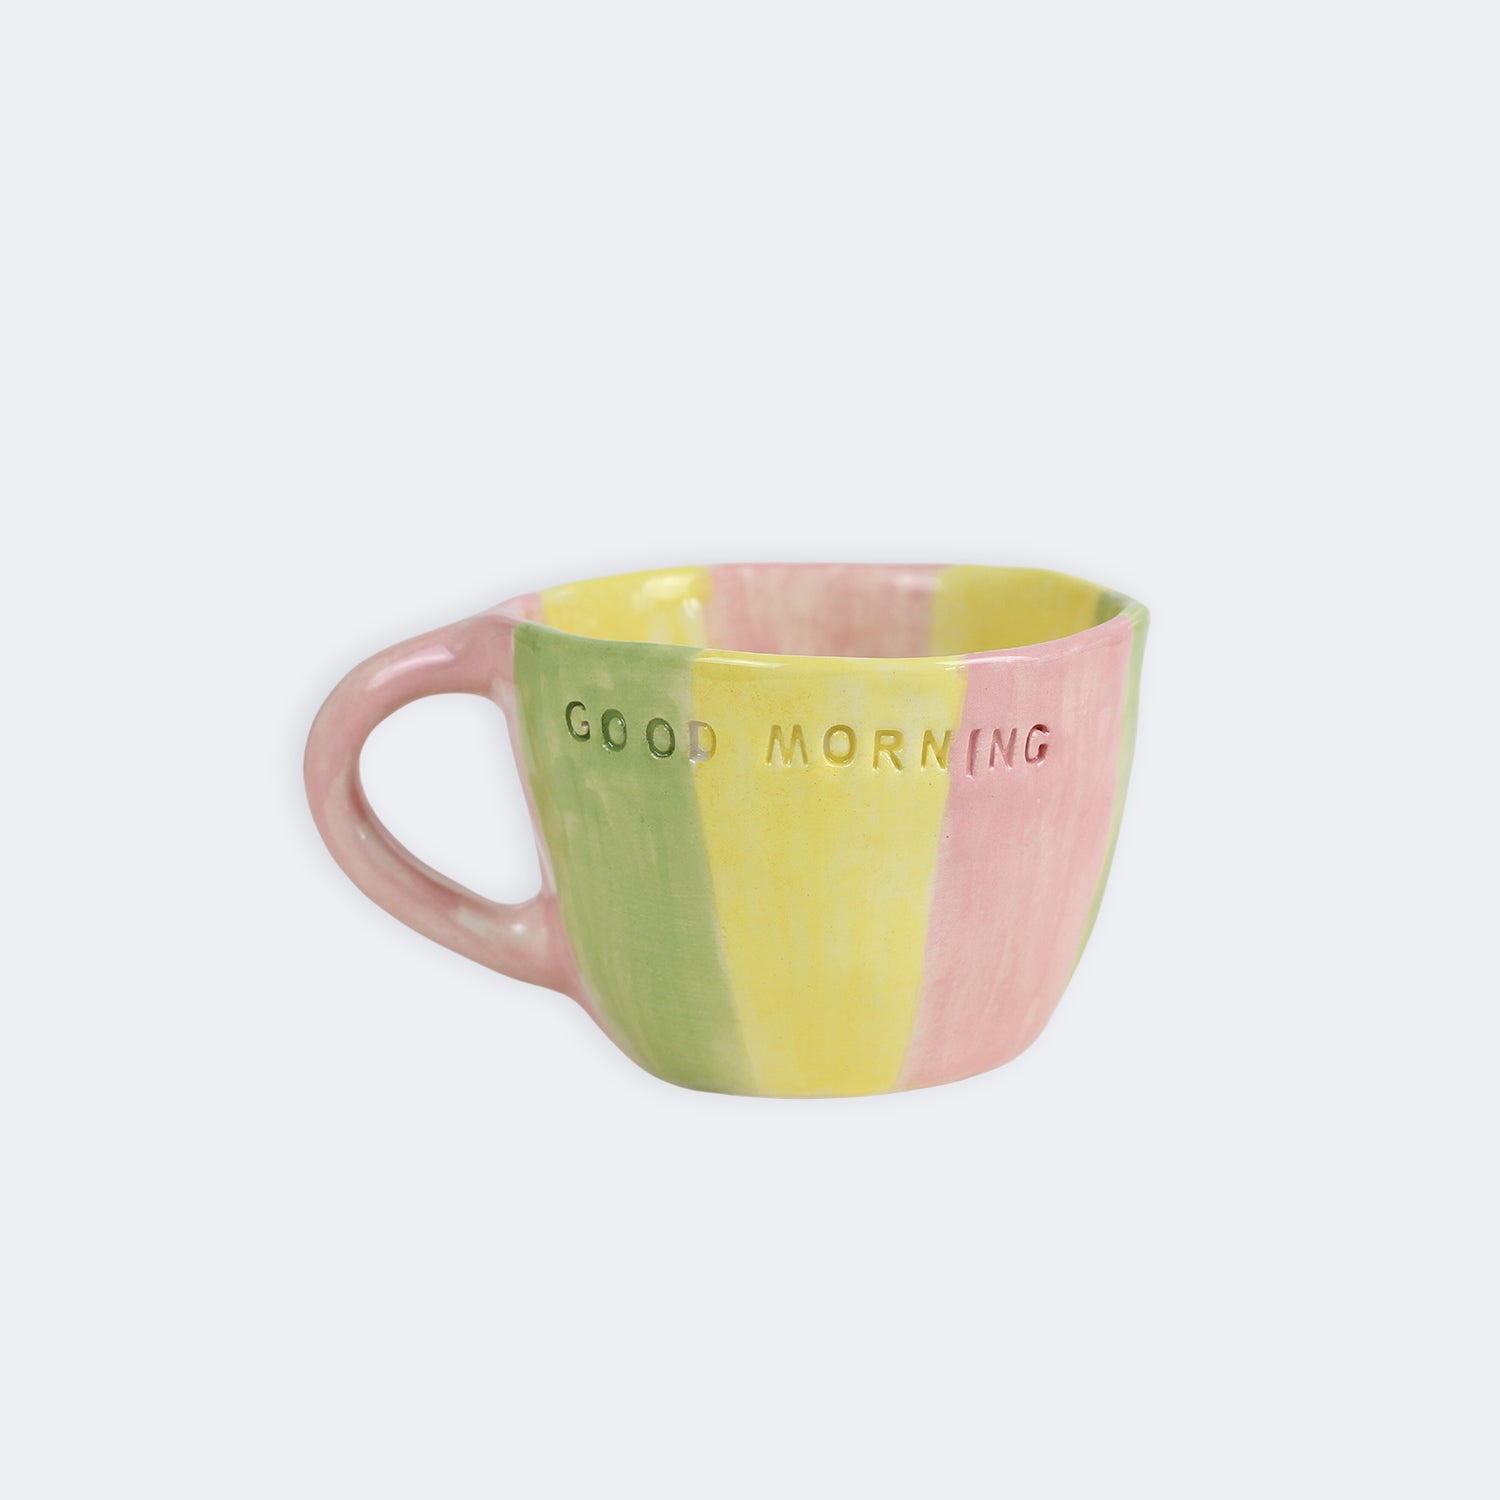 Mornis Ceramic Mug